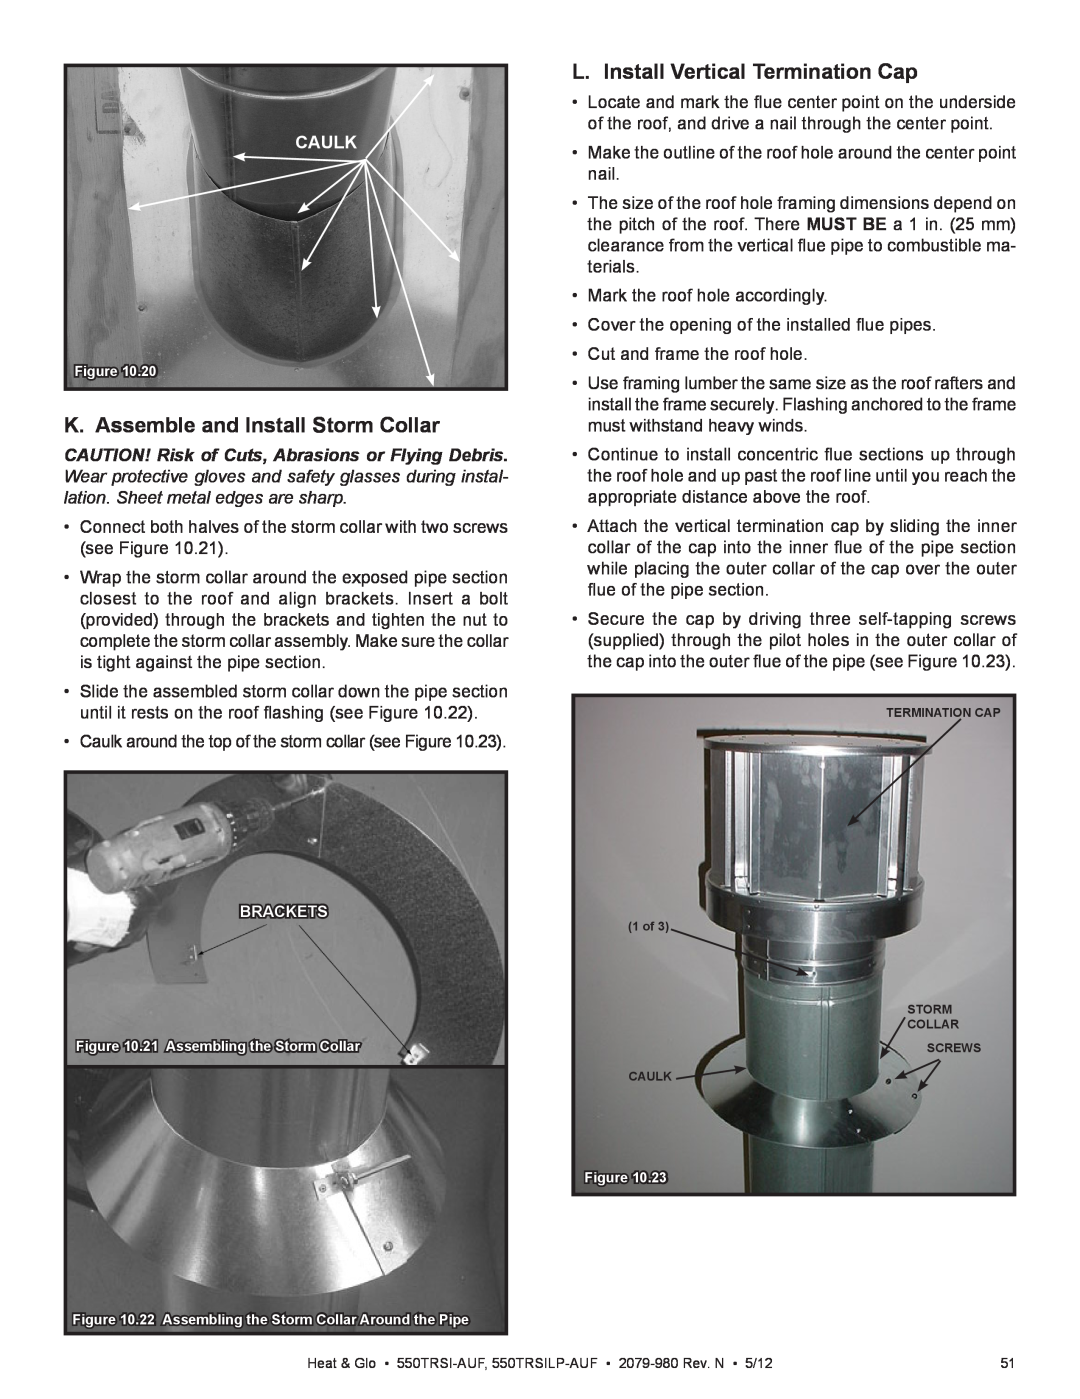 Heat & Glo LifeStyle 550TRSI-AUF K. Assemble and Install Storm Collar, L. Install Vertical Termination Cap, Caulk 